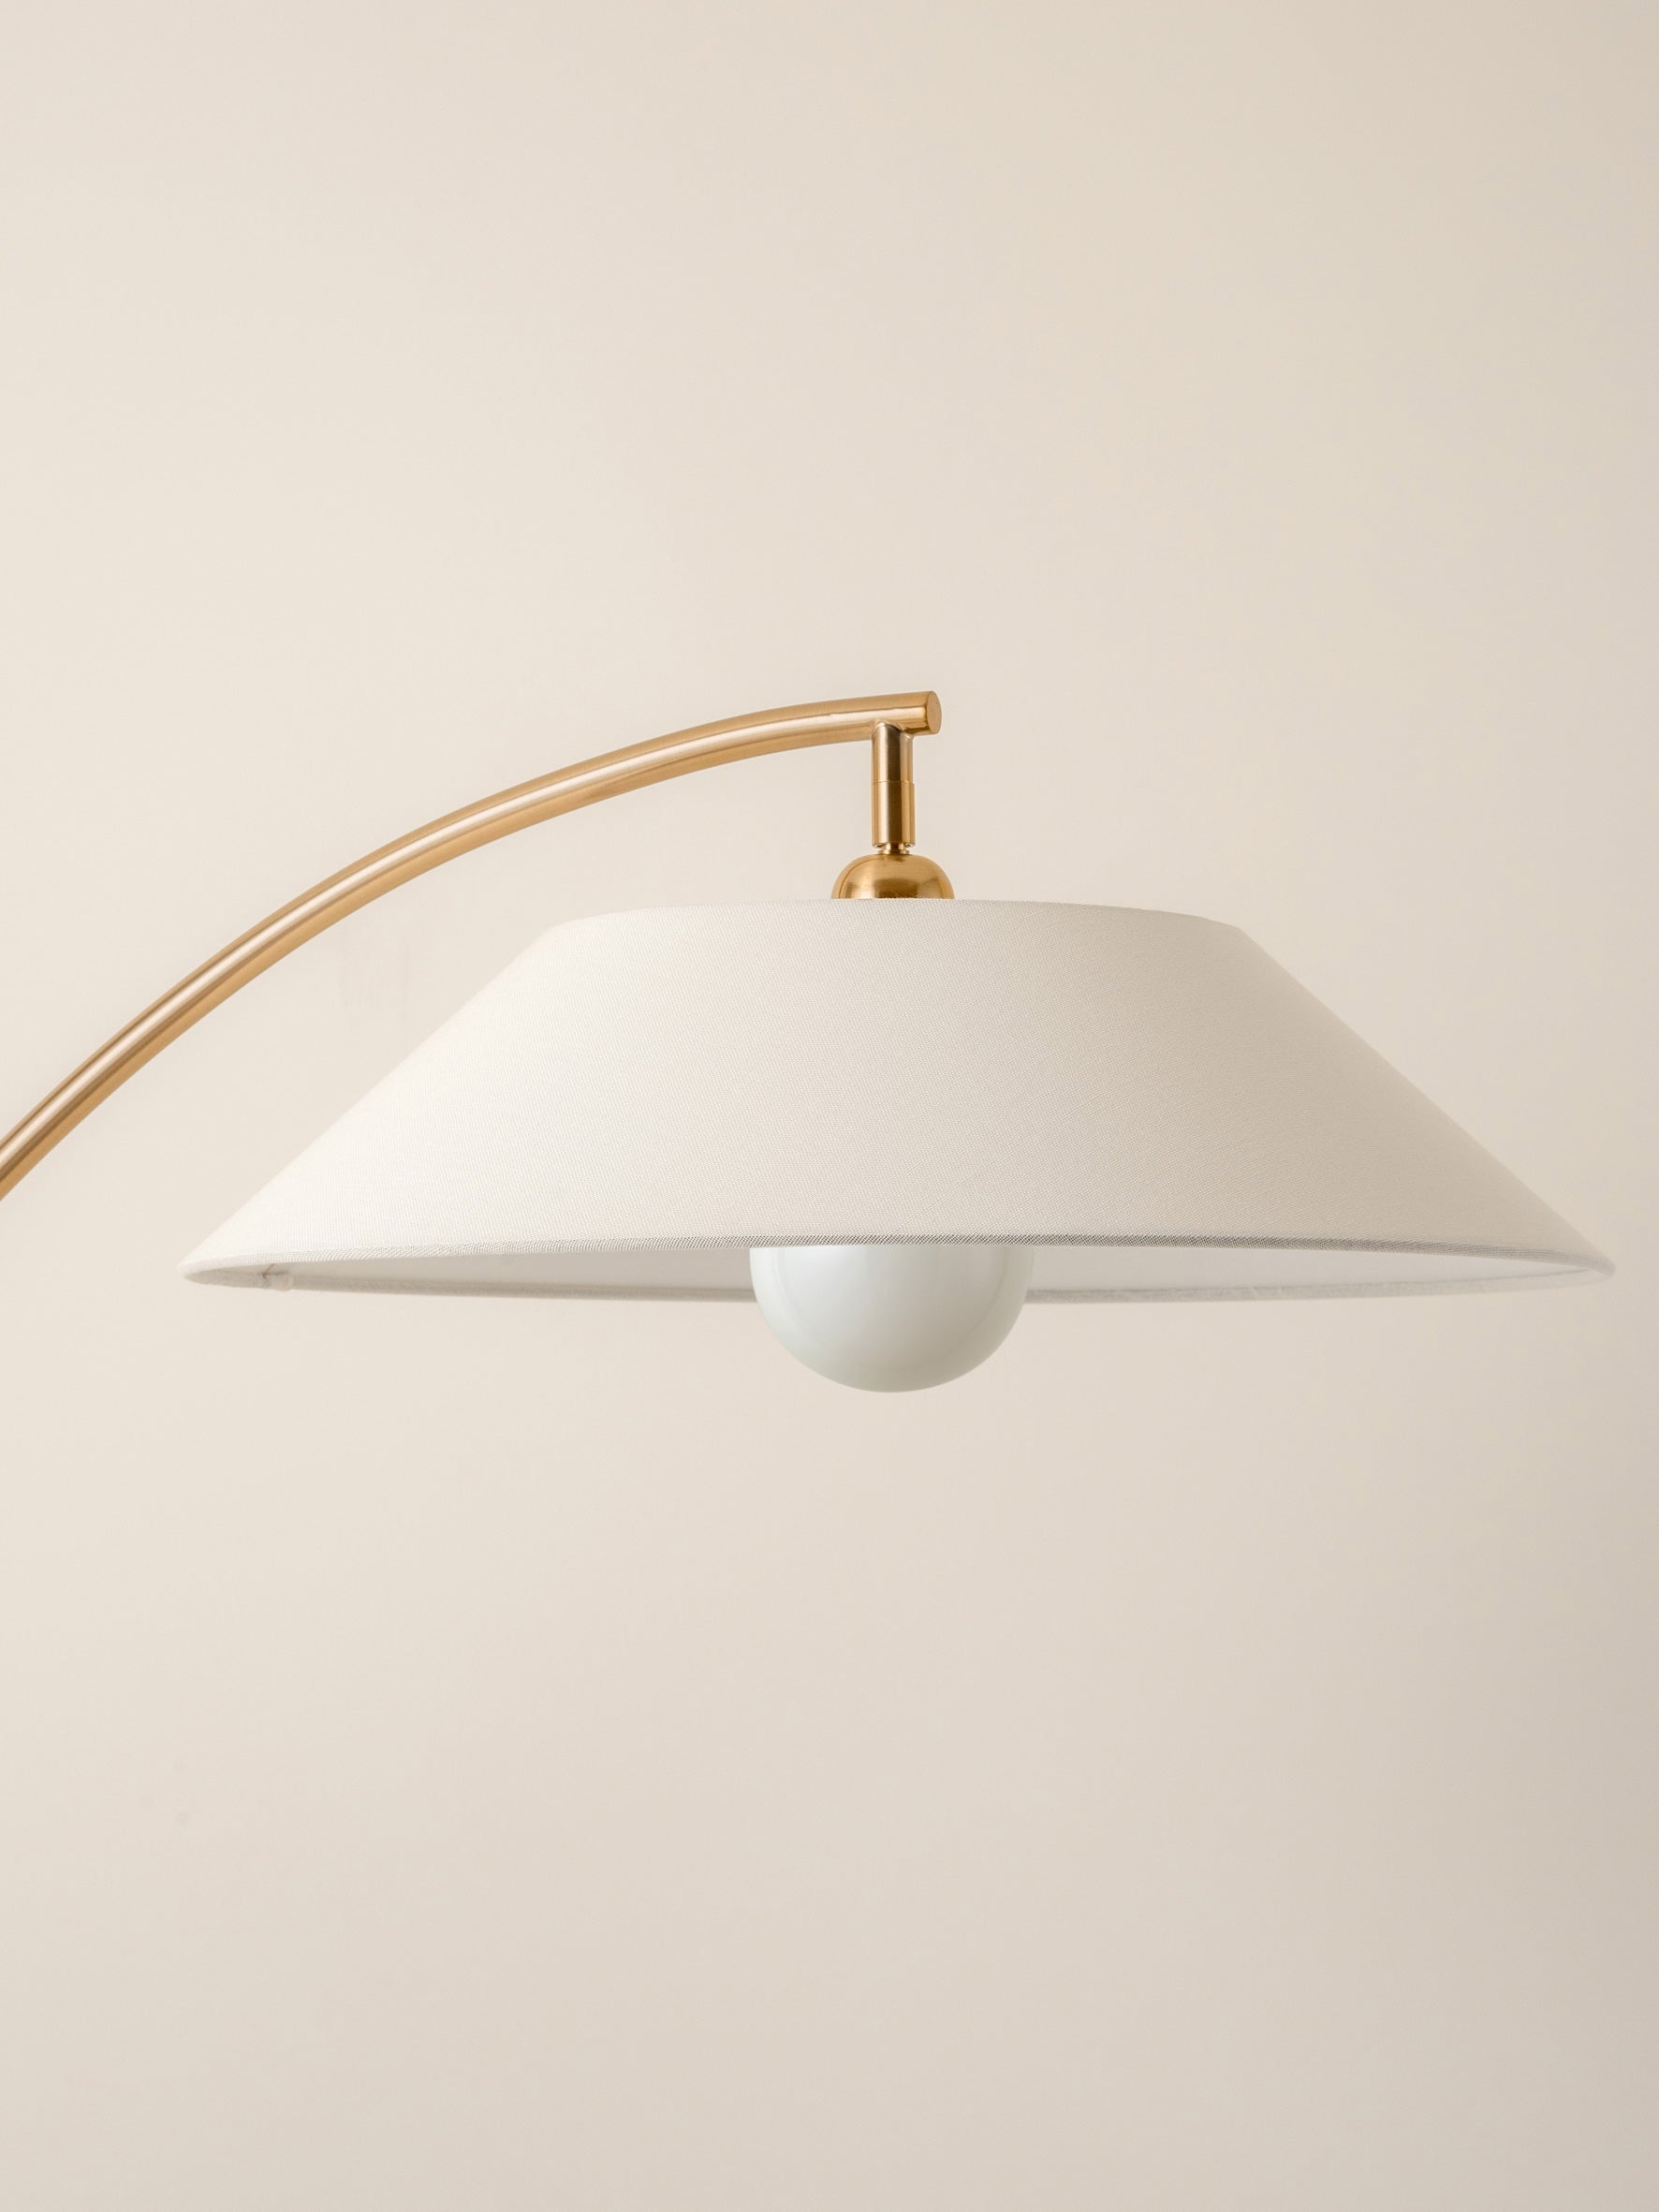 Circo - 1 light arc brass and natural linen floor lamp | Floor Lamp | Lights & Lamps | UK | Modern Affordable Designer Lighting